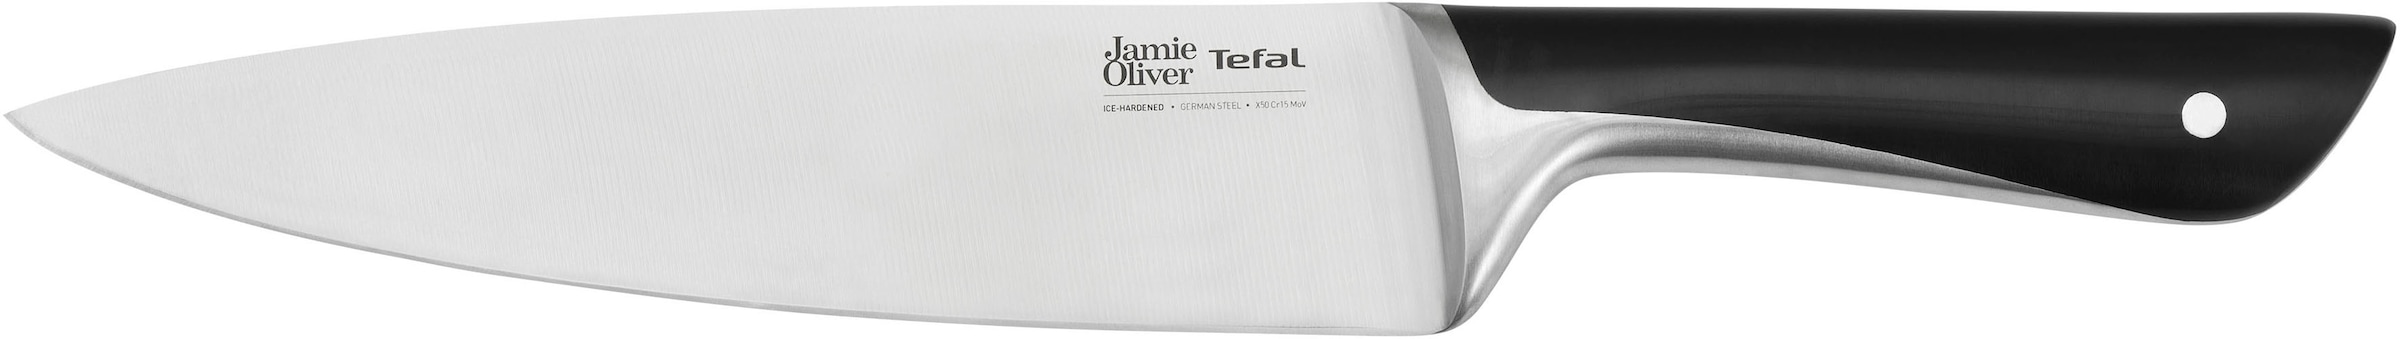 Tefal Pfannen-Set »Jamie Oliver Cook Smart«, Edelstahl 18/10, (Set, je 1 Pfanne 20/24/28 cm, 1 Kochmesser), stilvolle Edelstahl-Pfannen, inkl. Kochmesser, Rezeptbuch